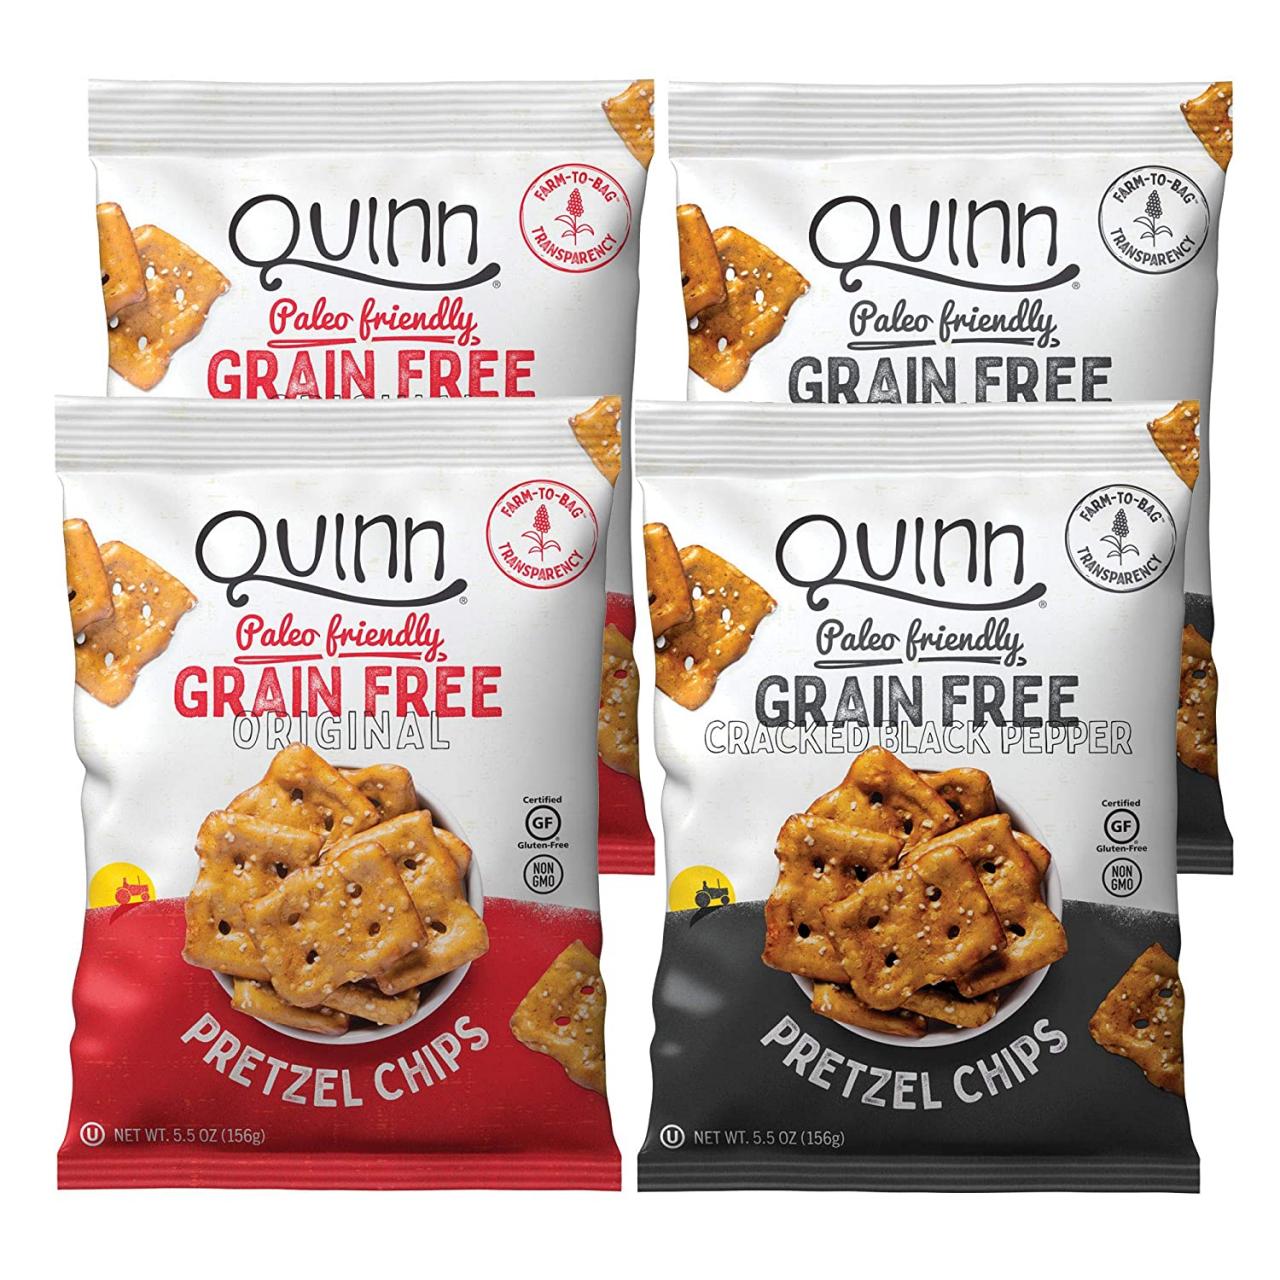 Discounted Gluten-Free Snacks